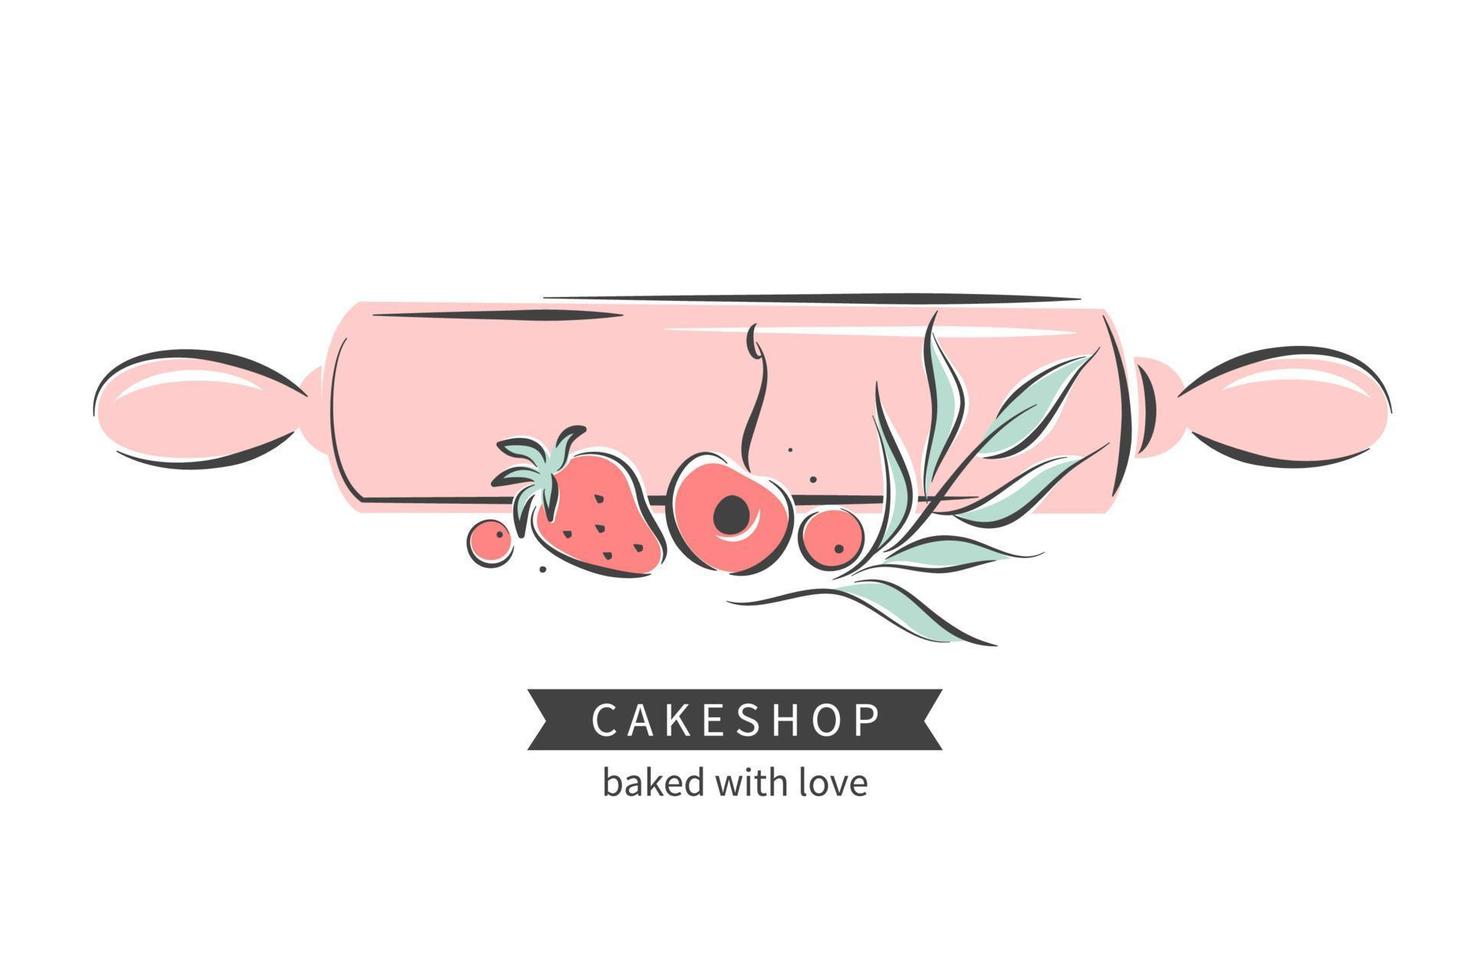 Cake shop, Bakery shop, Pastry logo design. Graphic template for bake. Vector illustration